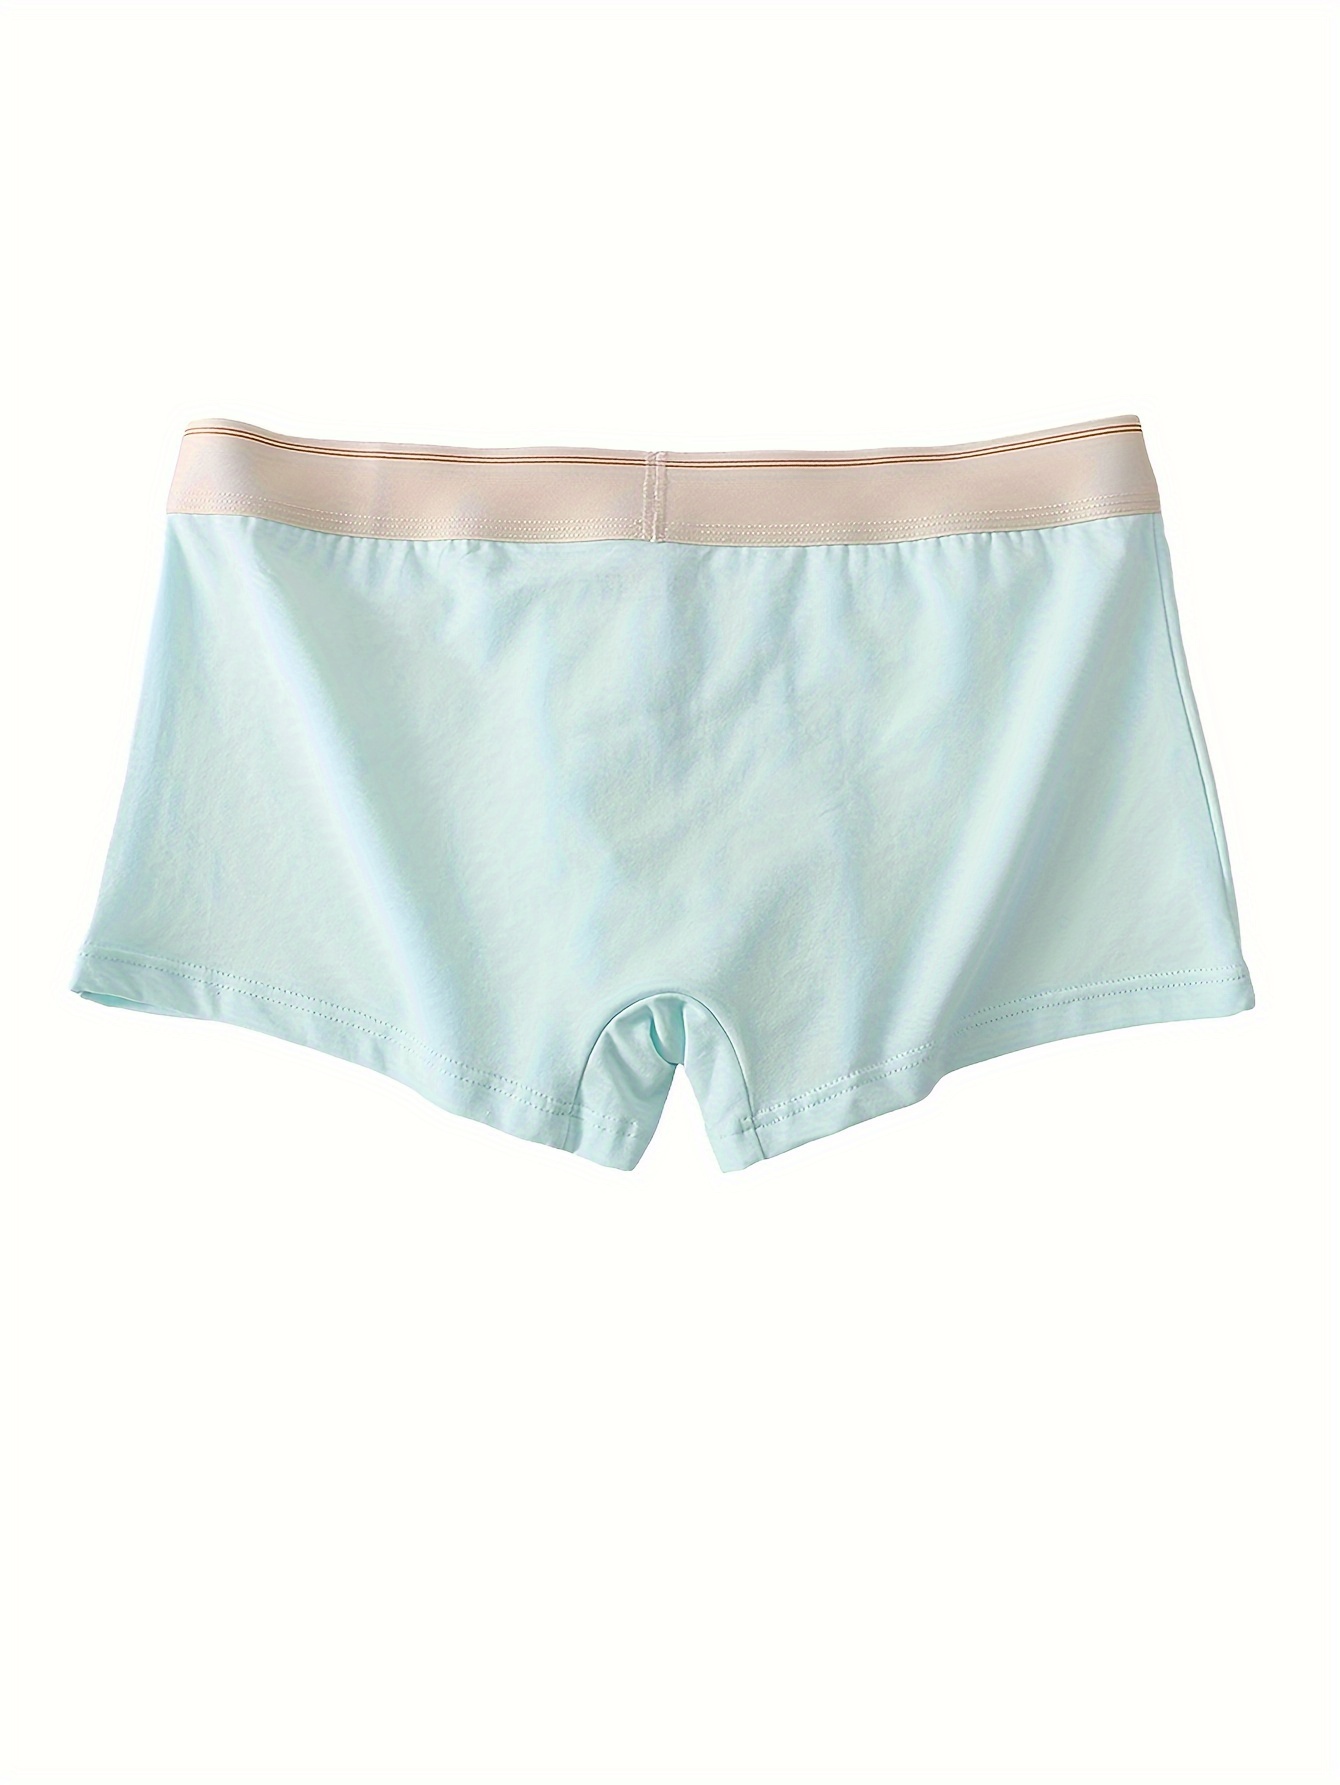 Men's Underwear Sexy Printed Boxer Briefs Mesh Panties Elephant Trunk  Boxers 